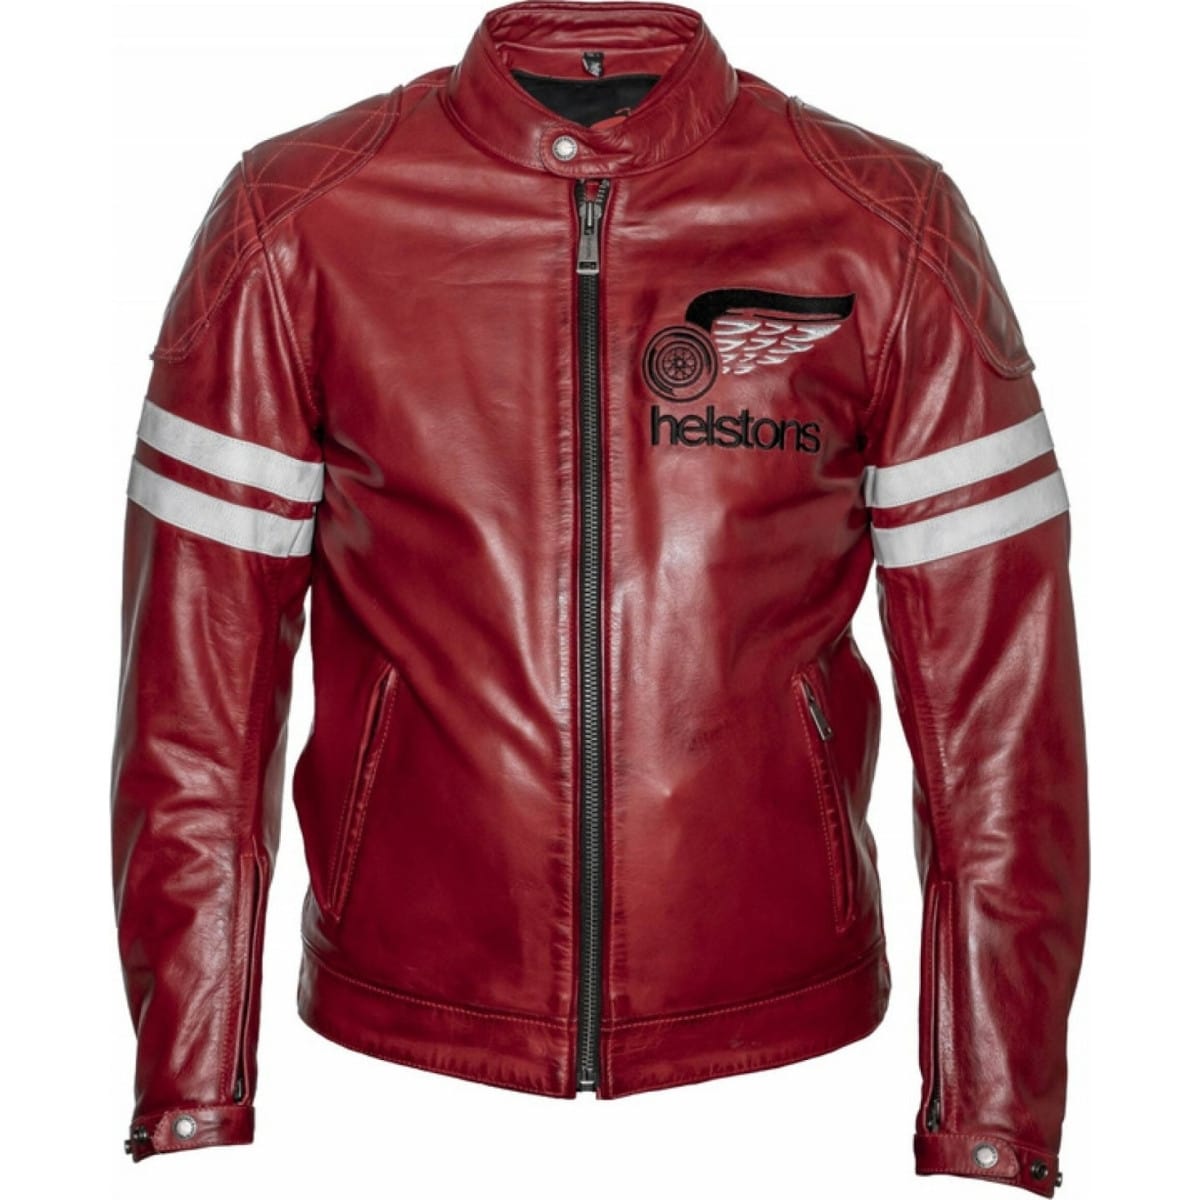 Image of Helstons Jake Speed Leather Buffalo Jacket Red White Size S ID 3662136102262